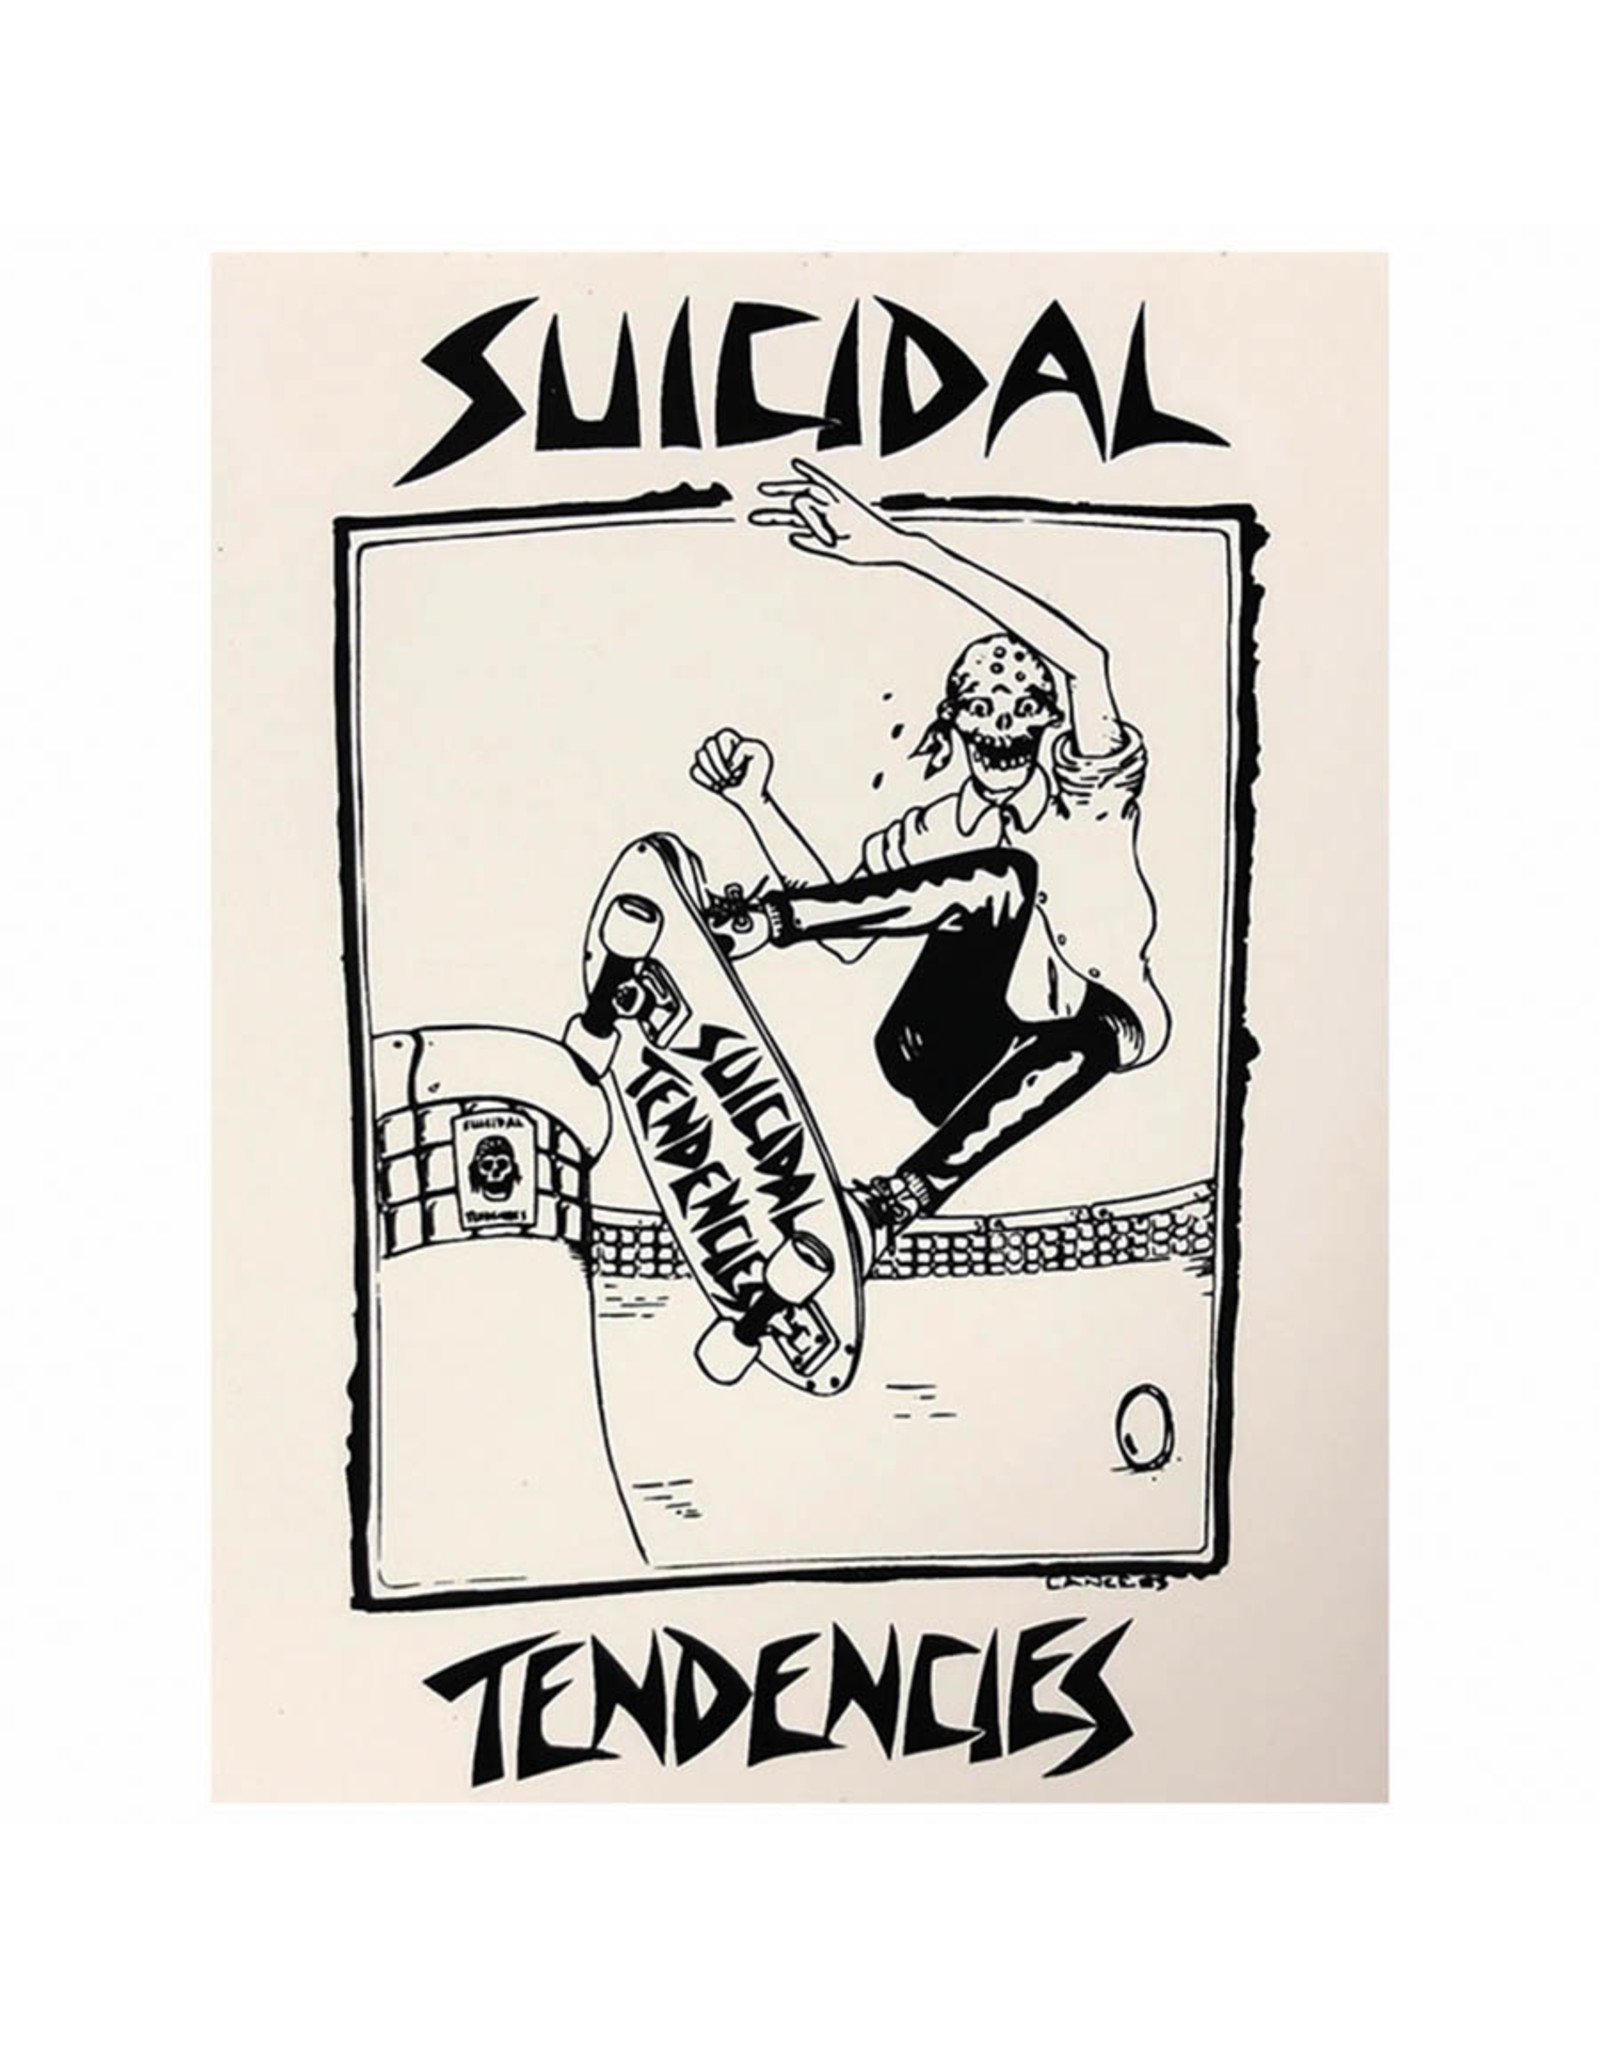 Ecstasy suicidal перевод песни. Suicidal tendencies possessed. Thrash Metal скейт.